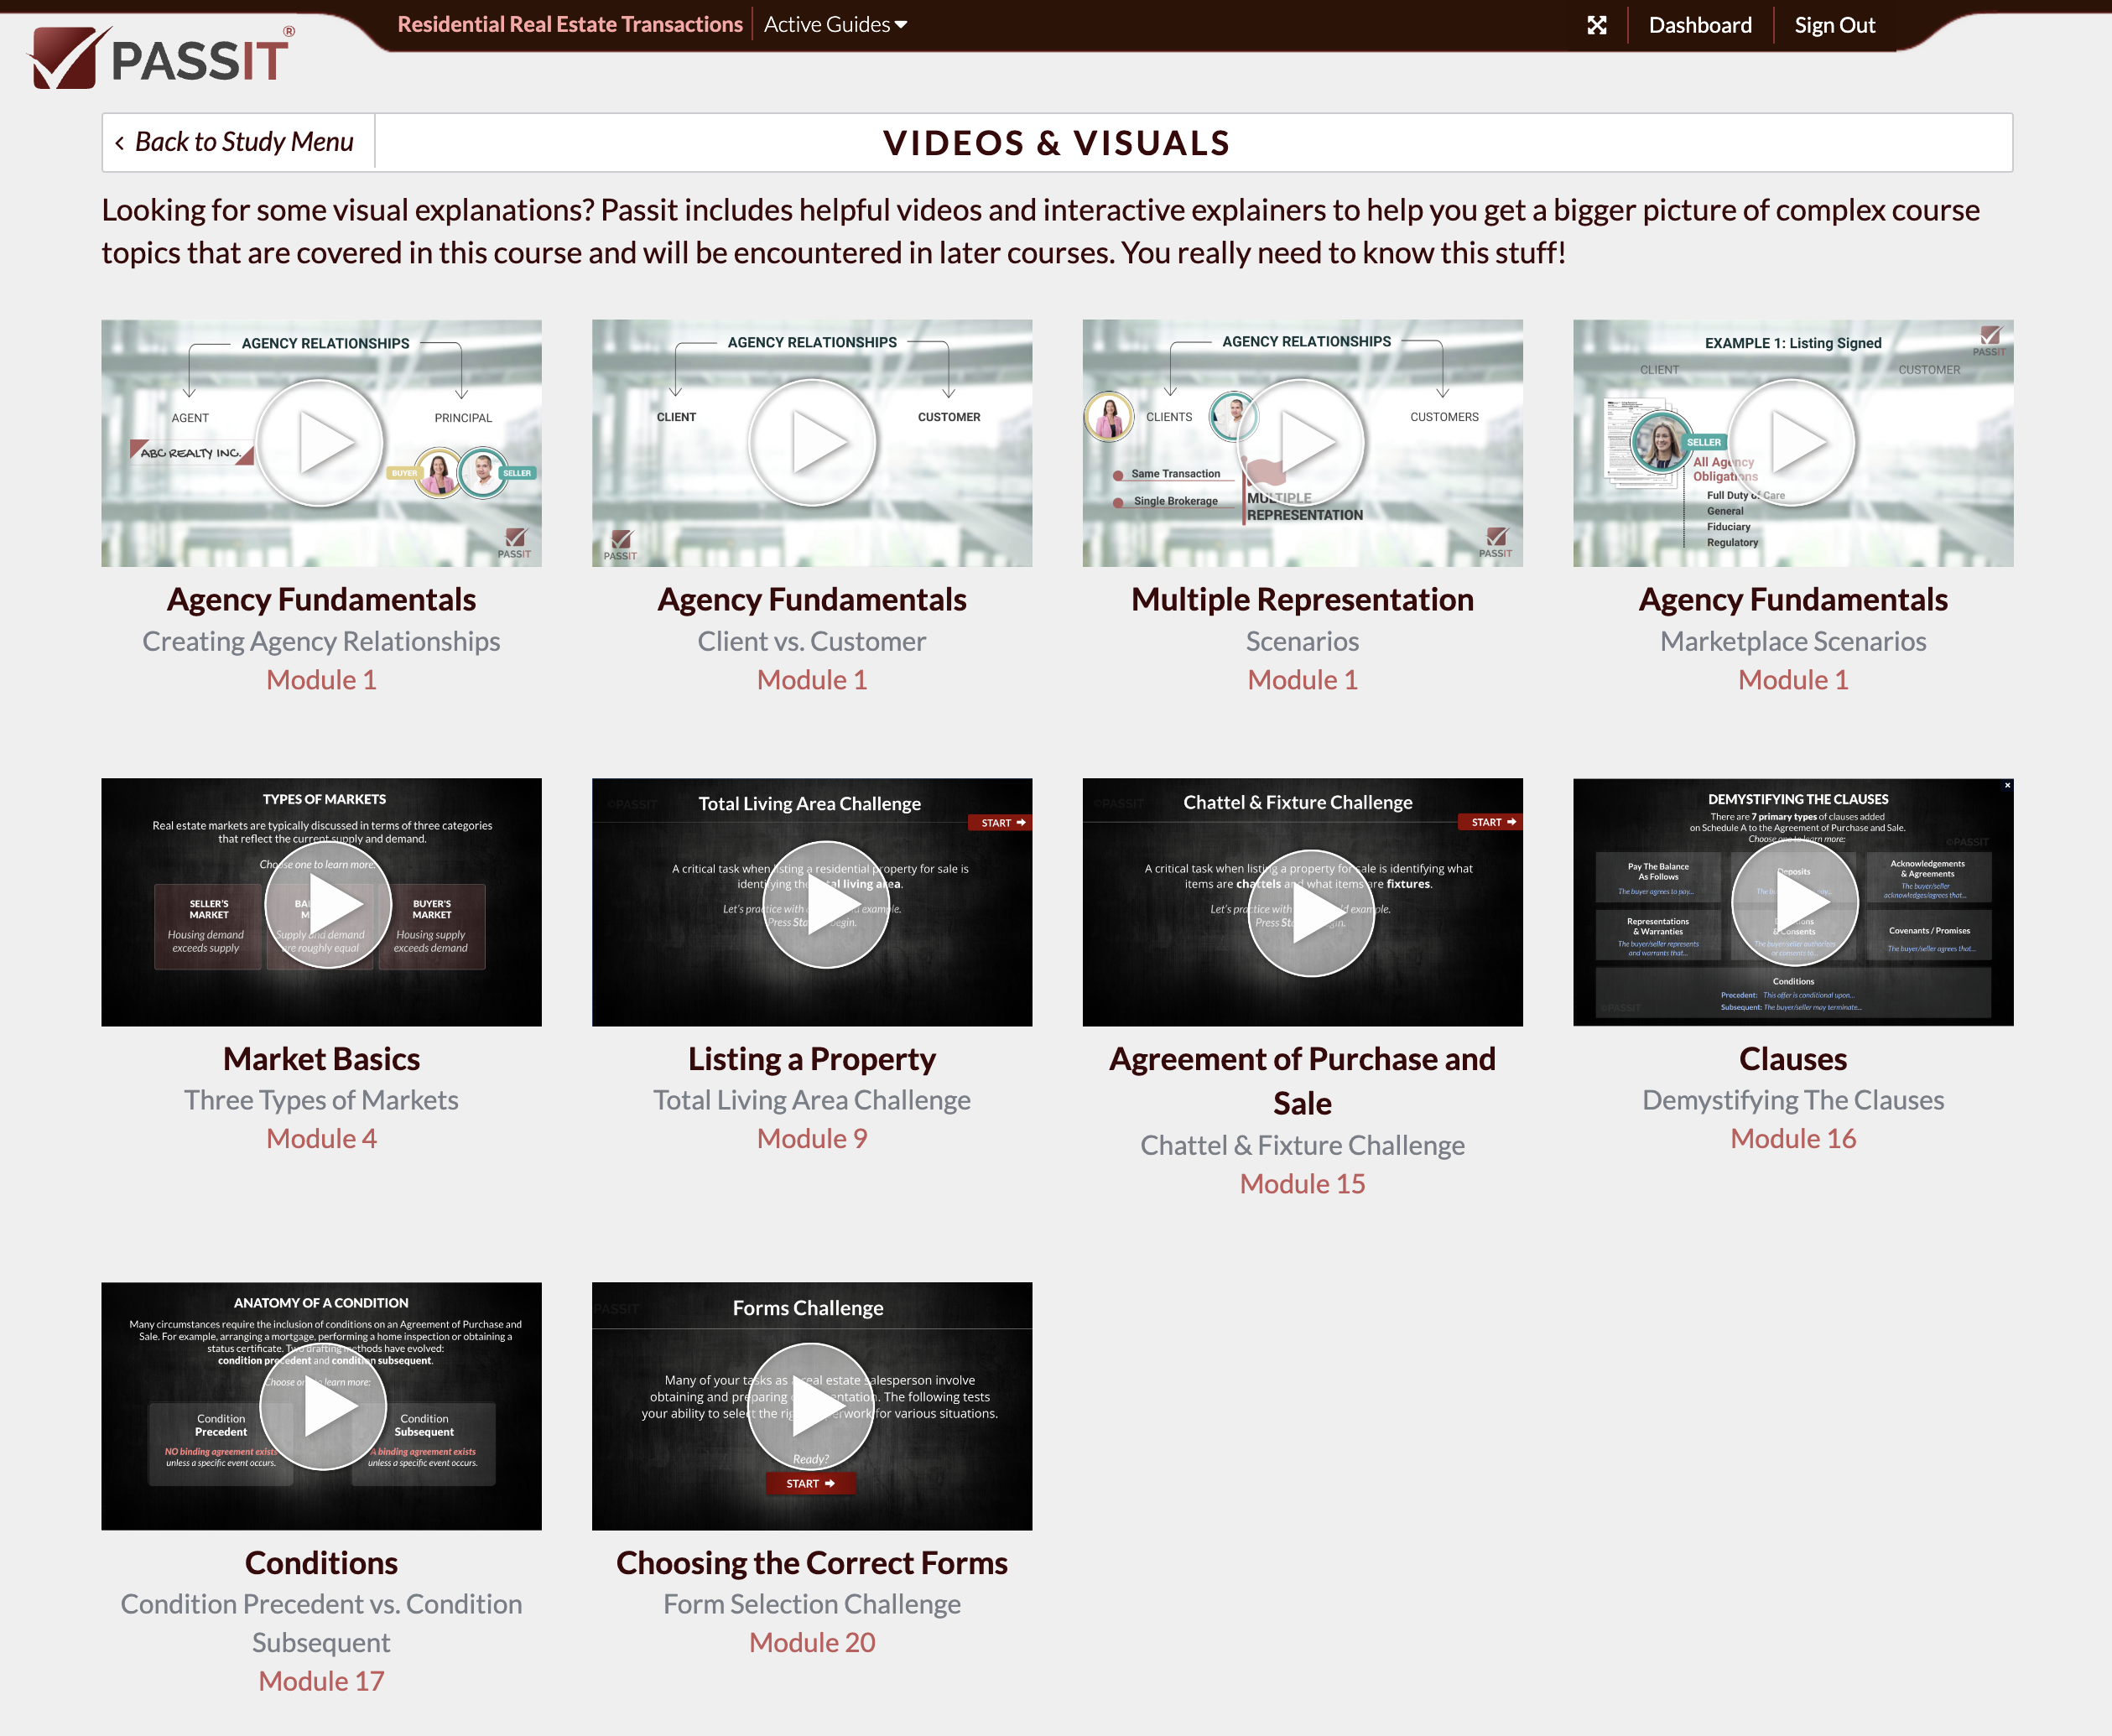 Snapshot of Passit Helpful Videos & Visuals Menu